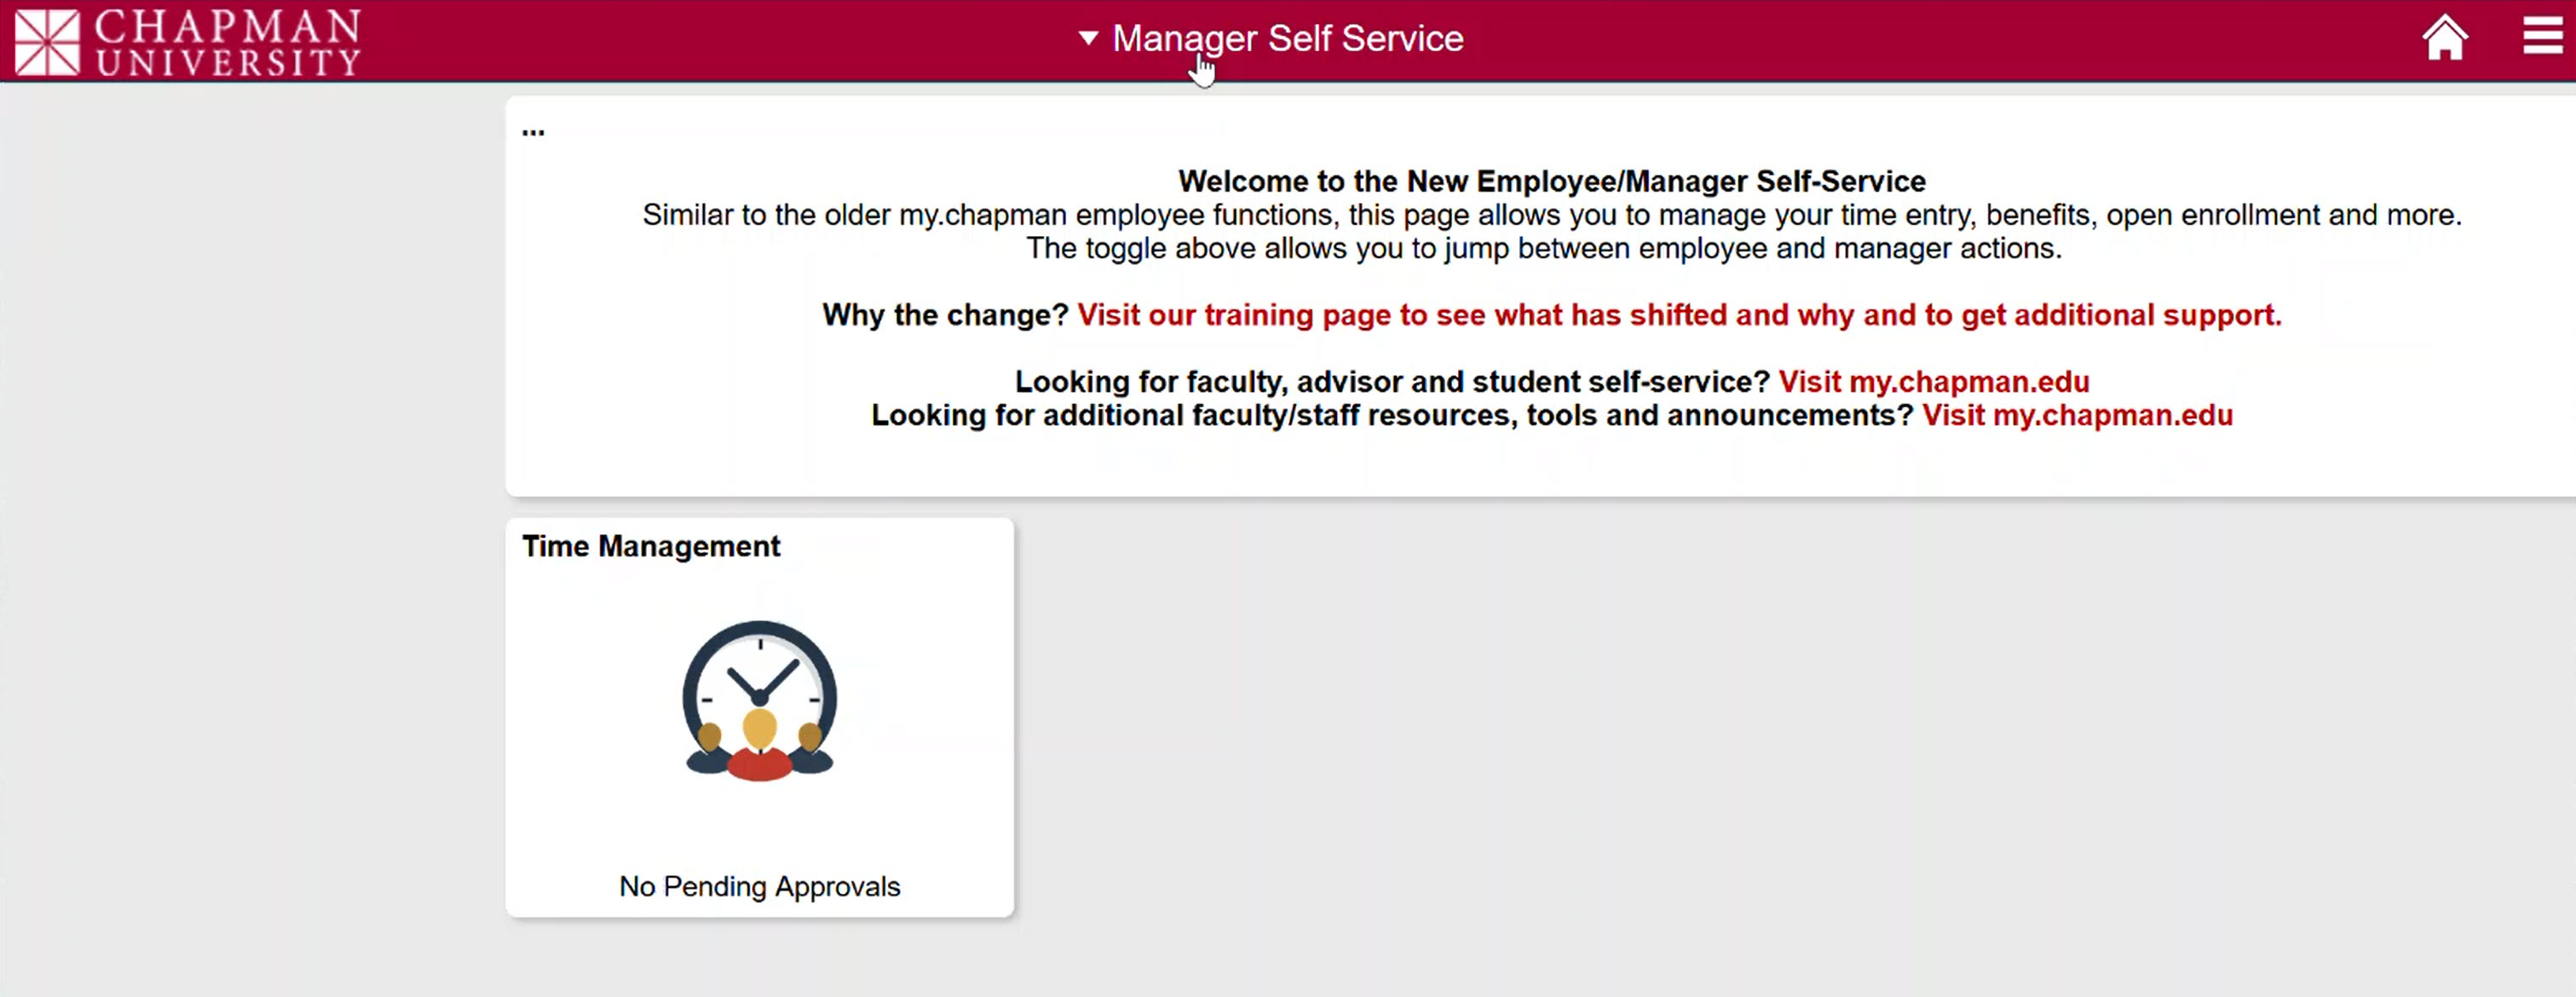 manager-self-service-menu.jpg